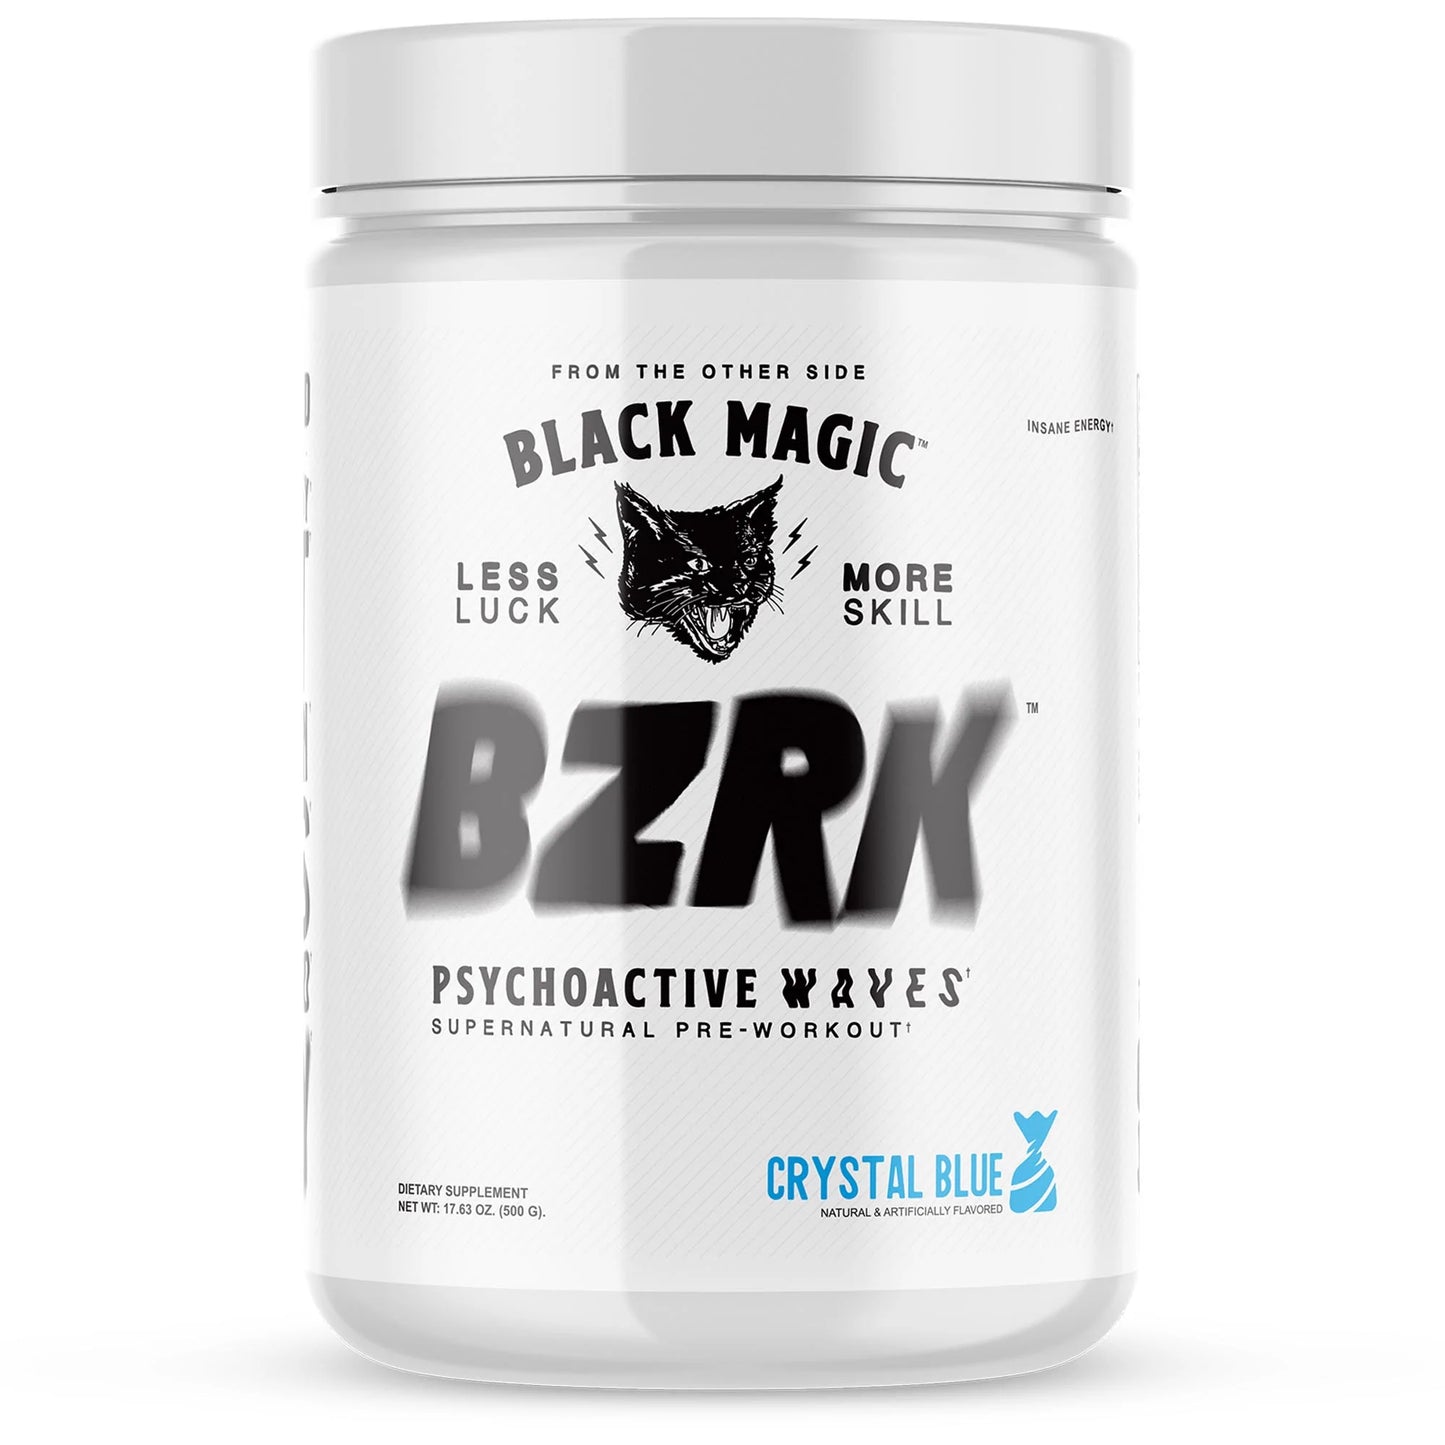 Black Magic Bzrk Crystal Blue